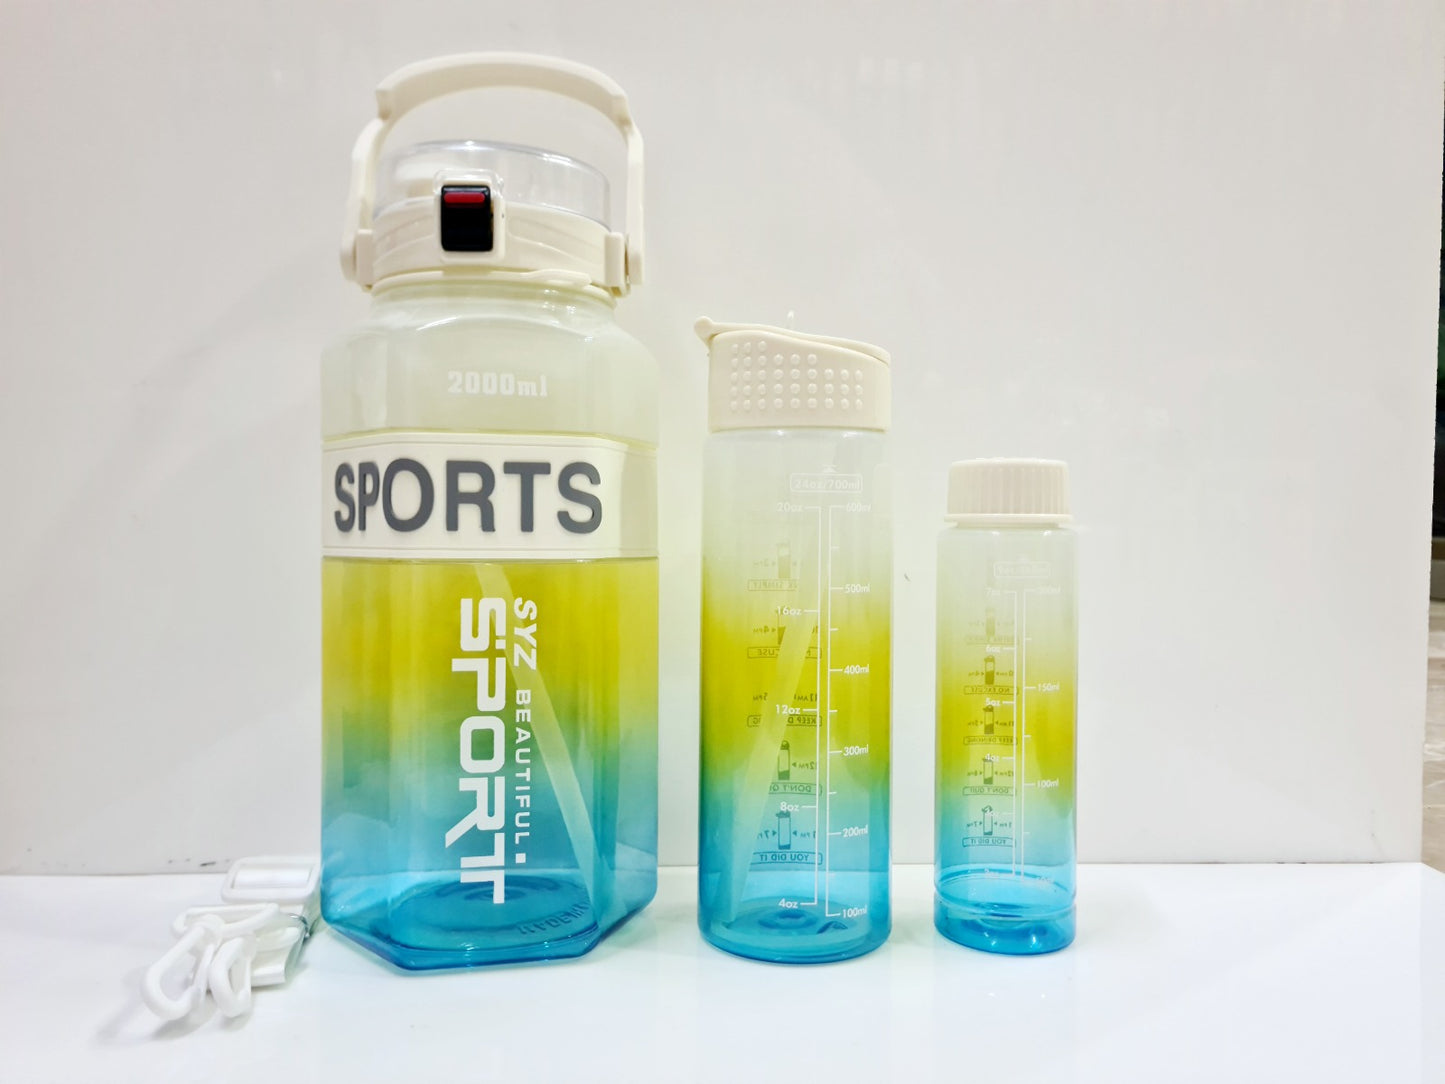 Trendo Sports Bottle Set (3pcs)